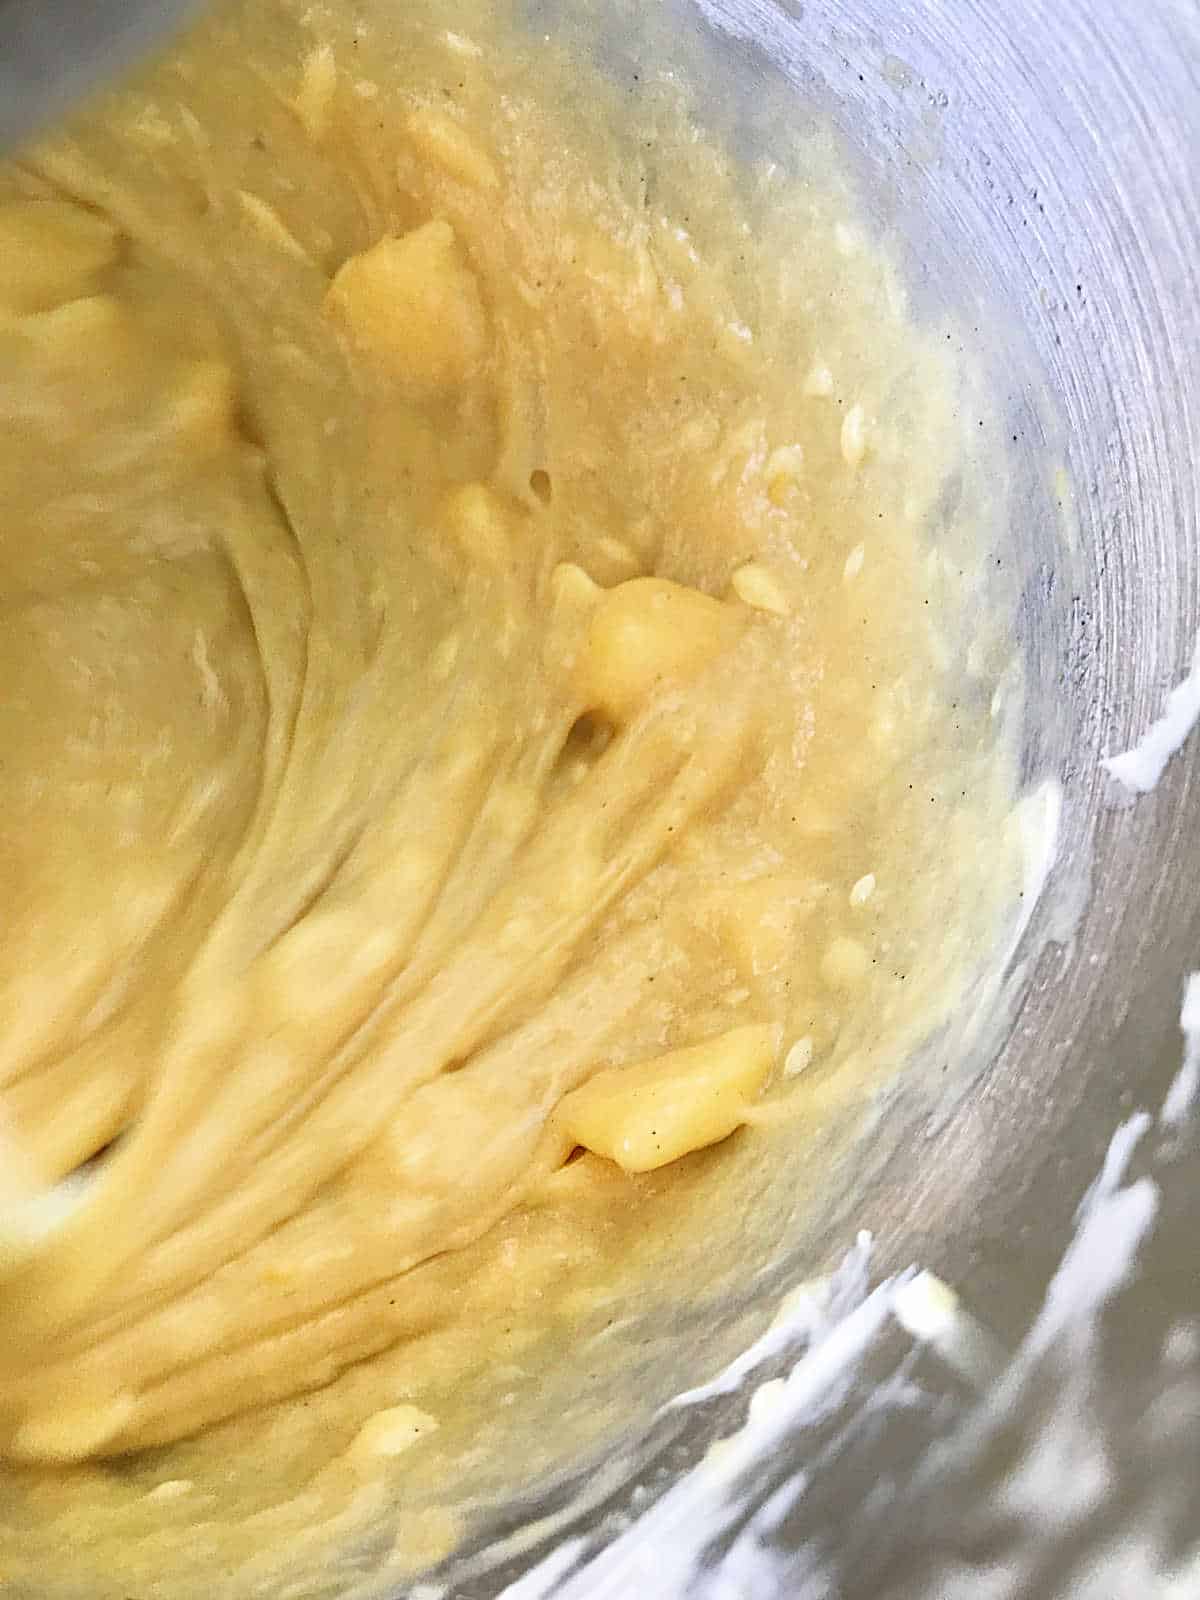 Golden pandoro dough being beaten with butter in a metal bowl